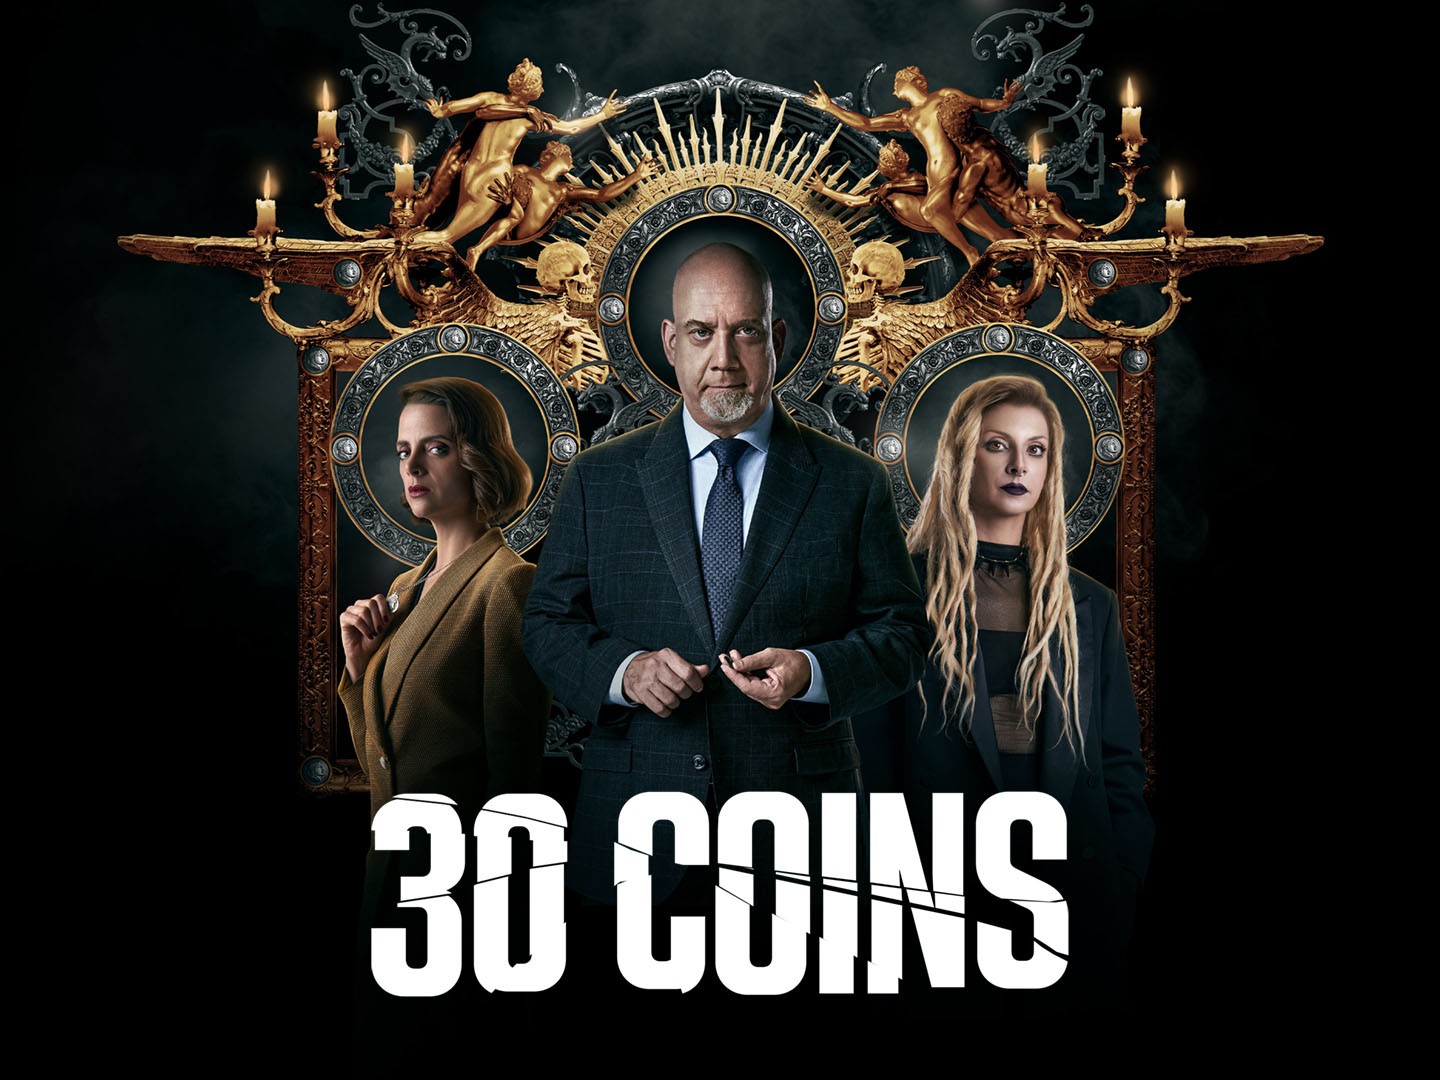 30 Coins [30 Monedas] Episodes 1-2 (2021) HBO Original Review 